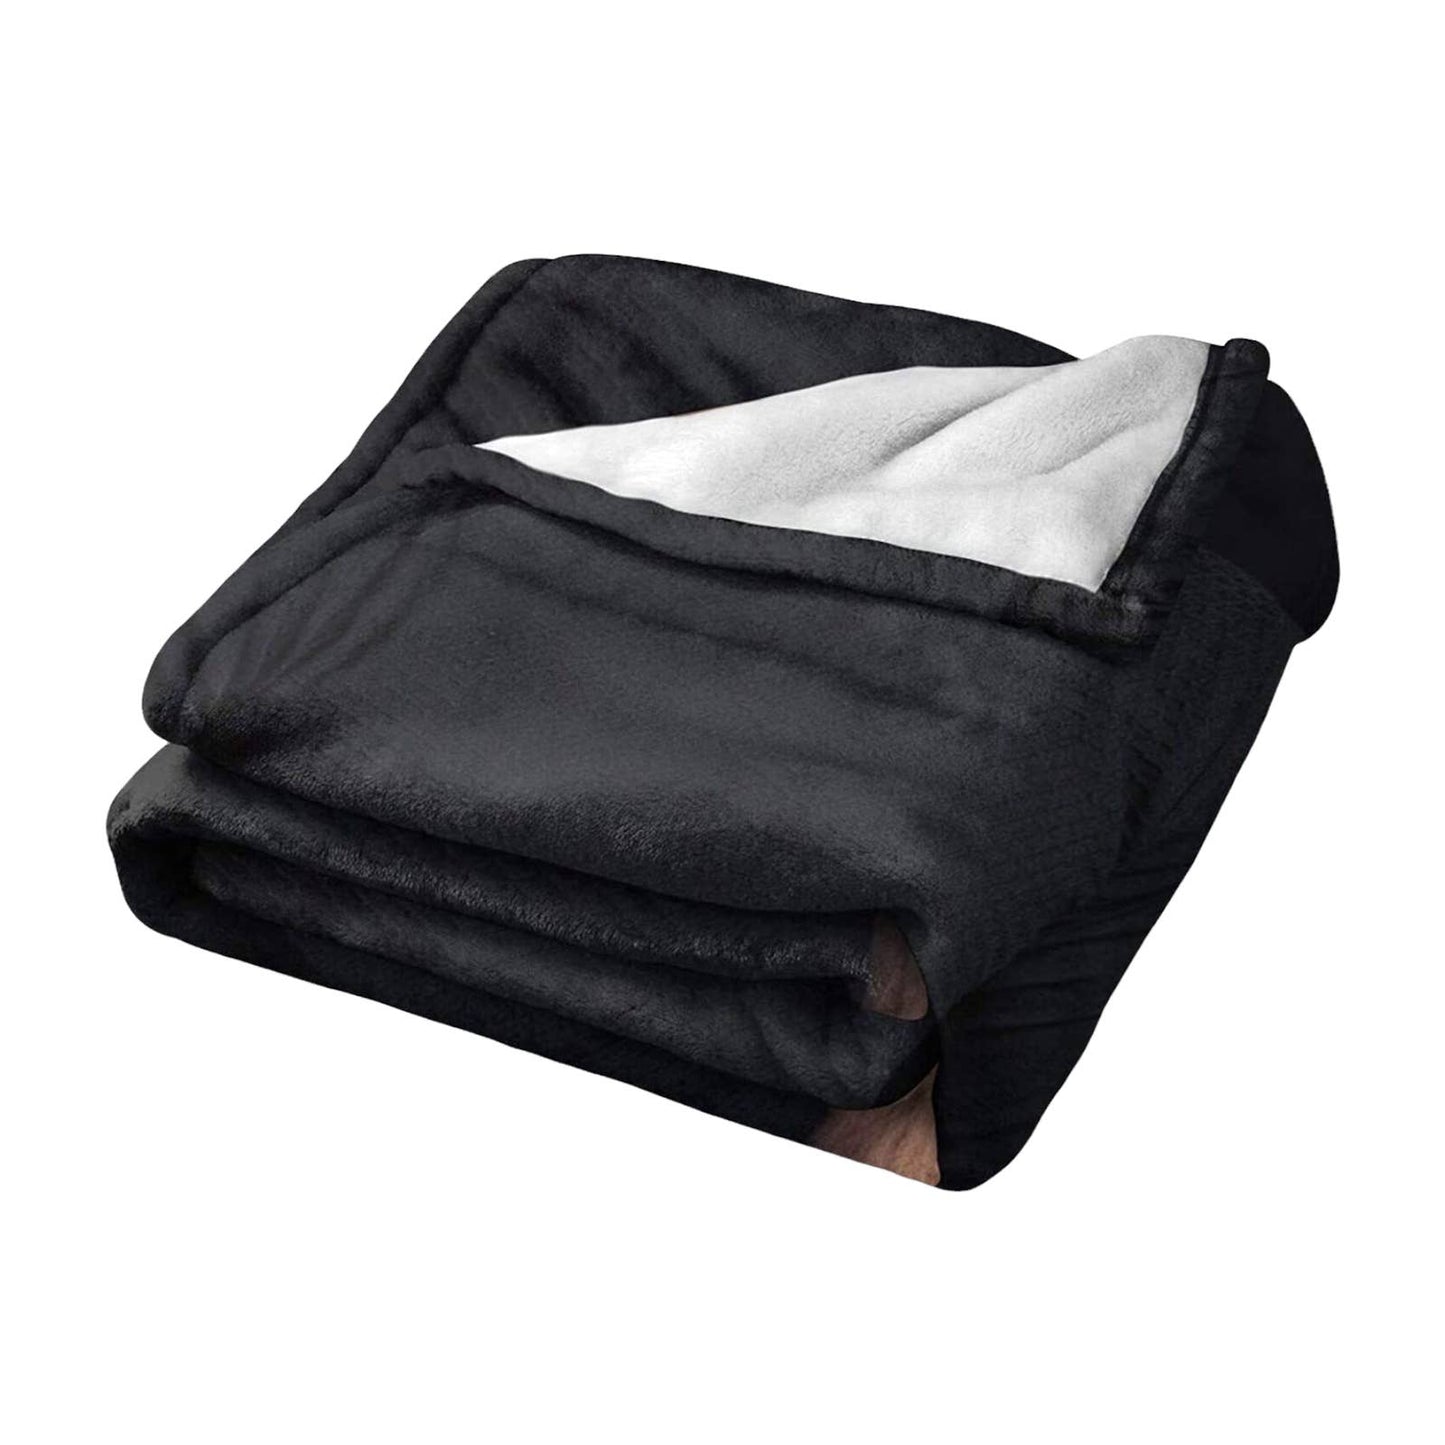 Jason Voorhees Large Soft Fleece Throw Blanket